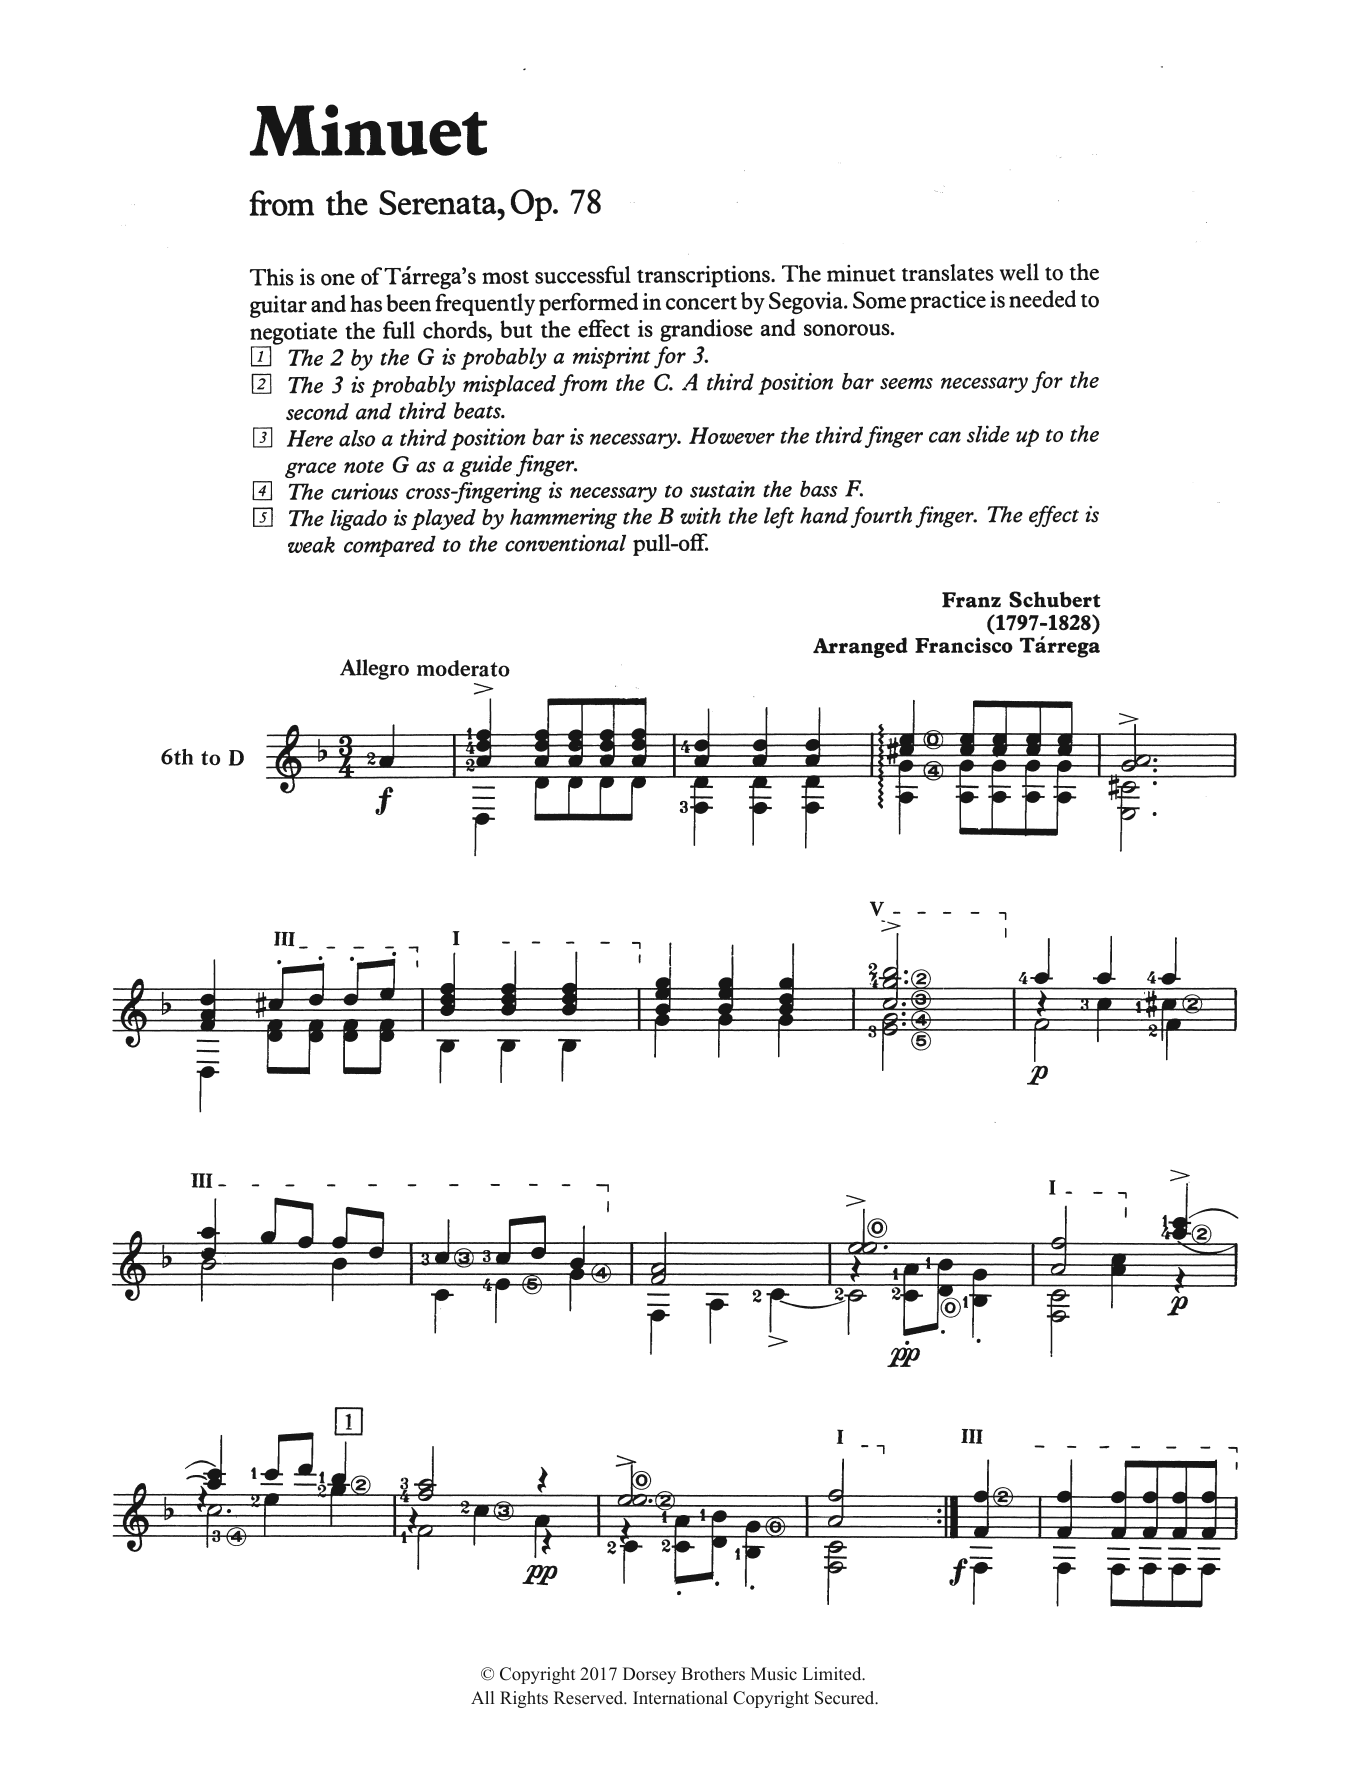 Franz Schubert Minuet (from the Serenata, Op. 78) sheet music notes and chords arranged for Solo Guitar